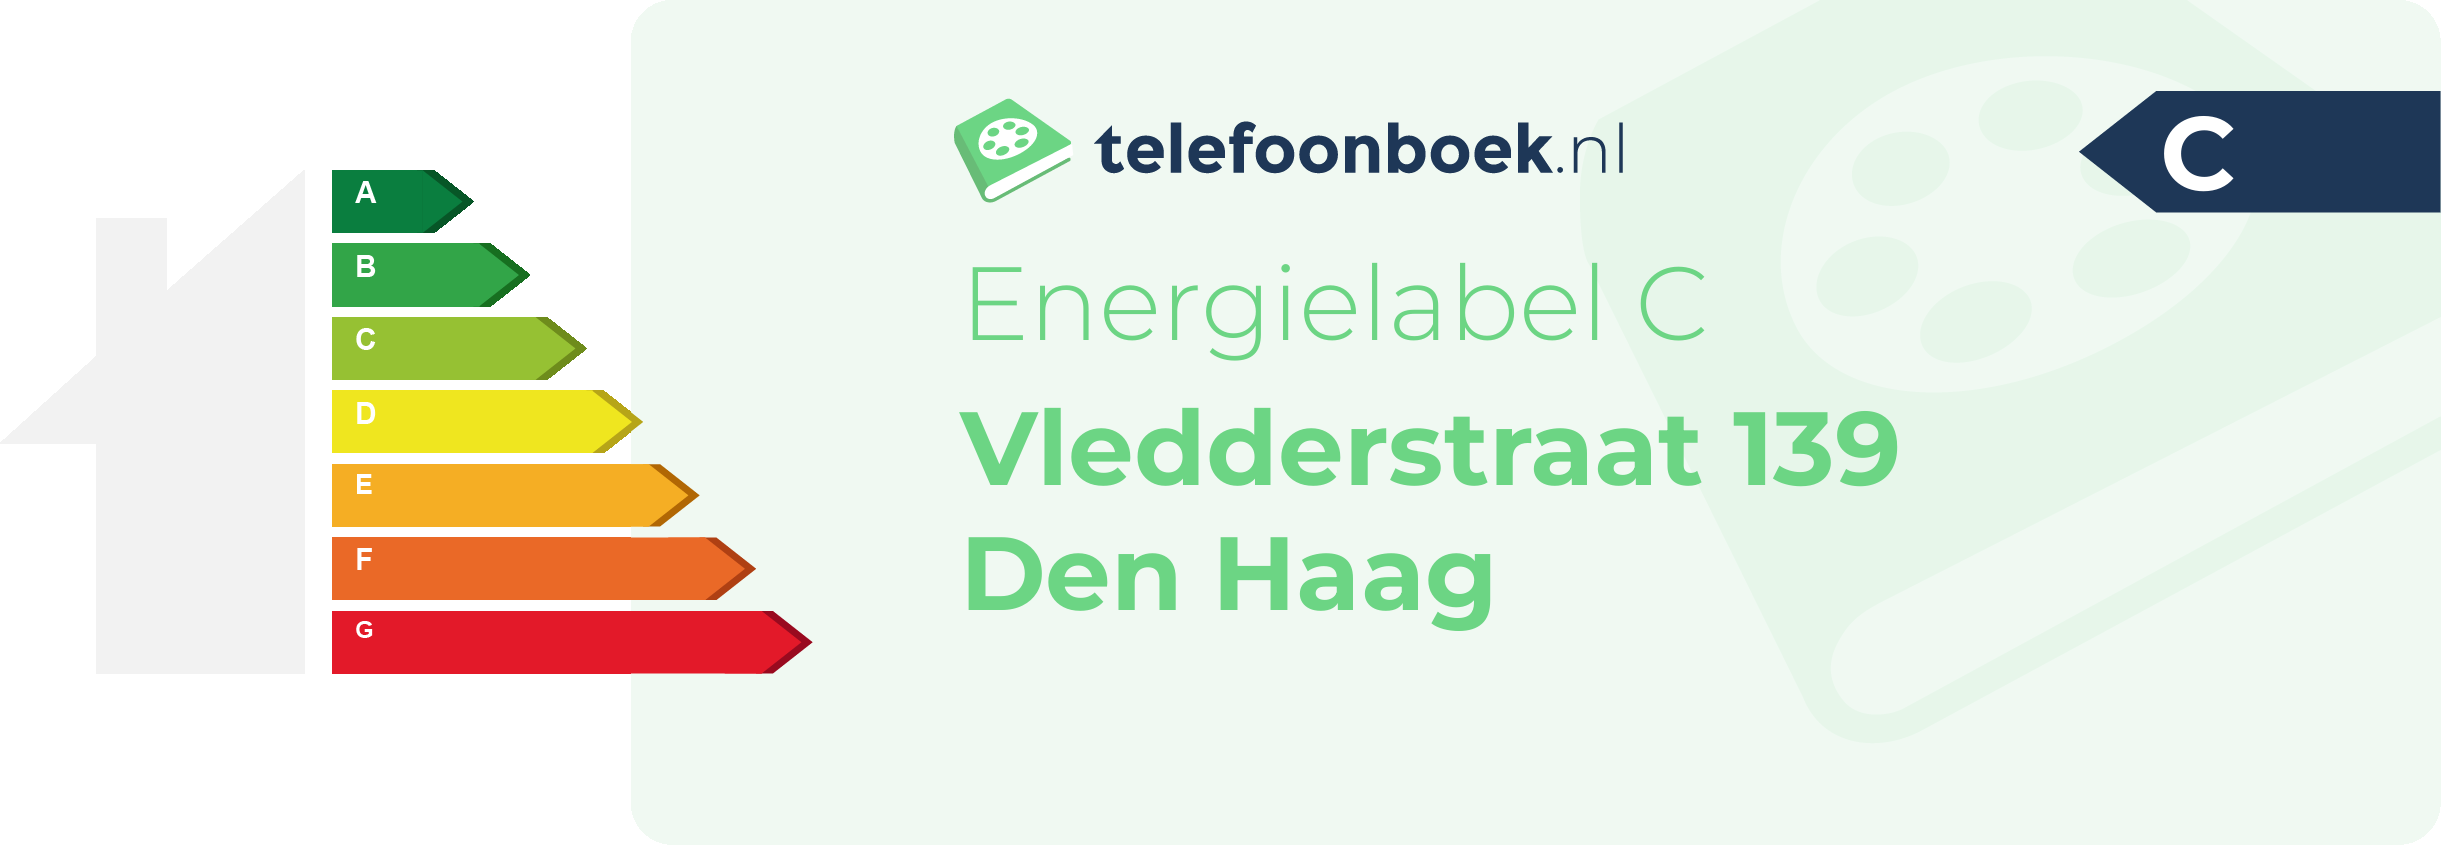 Energielabel Vledderstraat 139 Den Haag